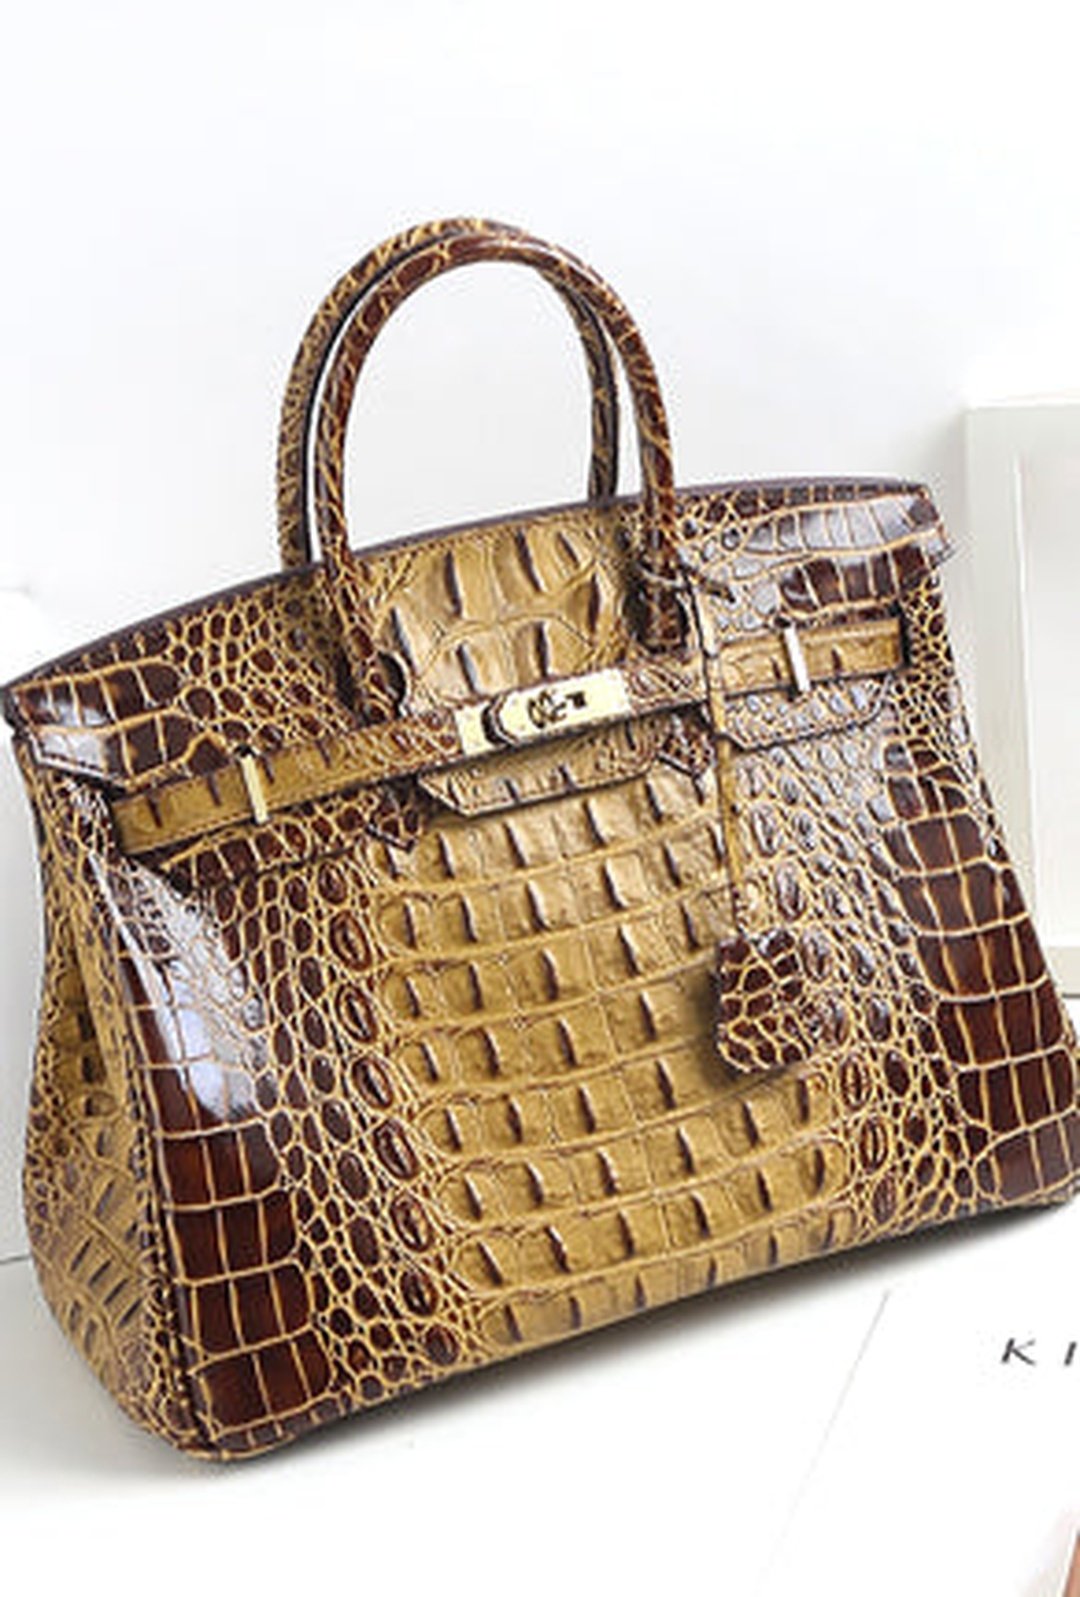 Hermes brown crocodile Birkin.  Handbag repair, Leather, Birkin